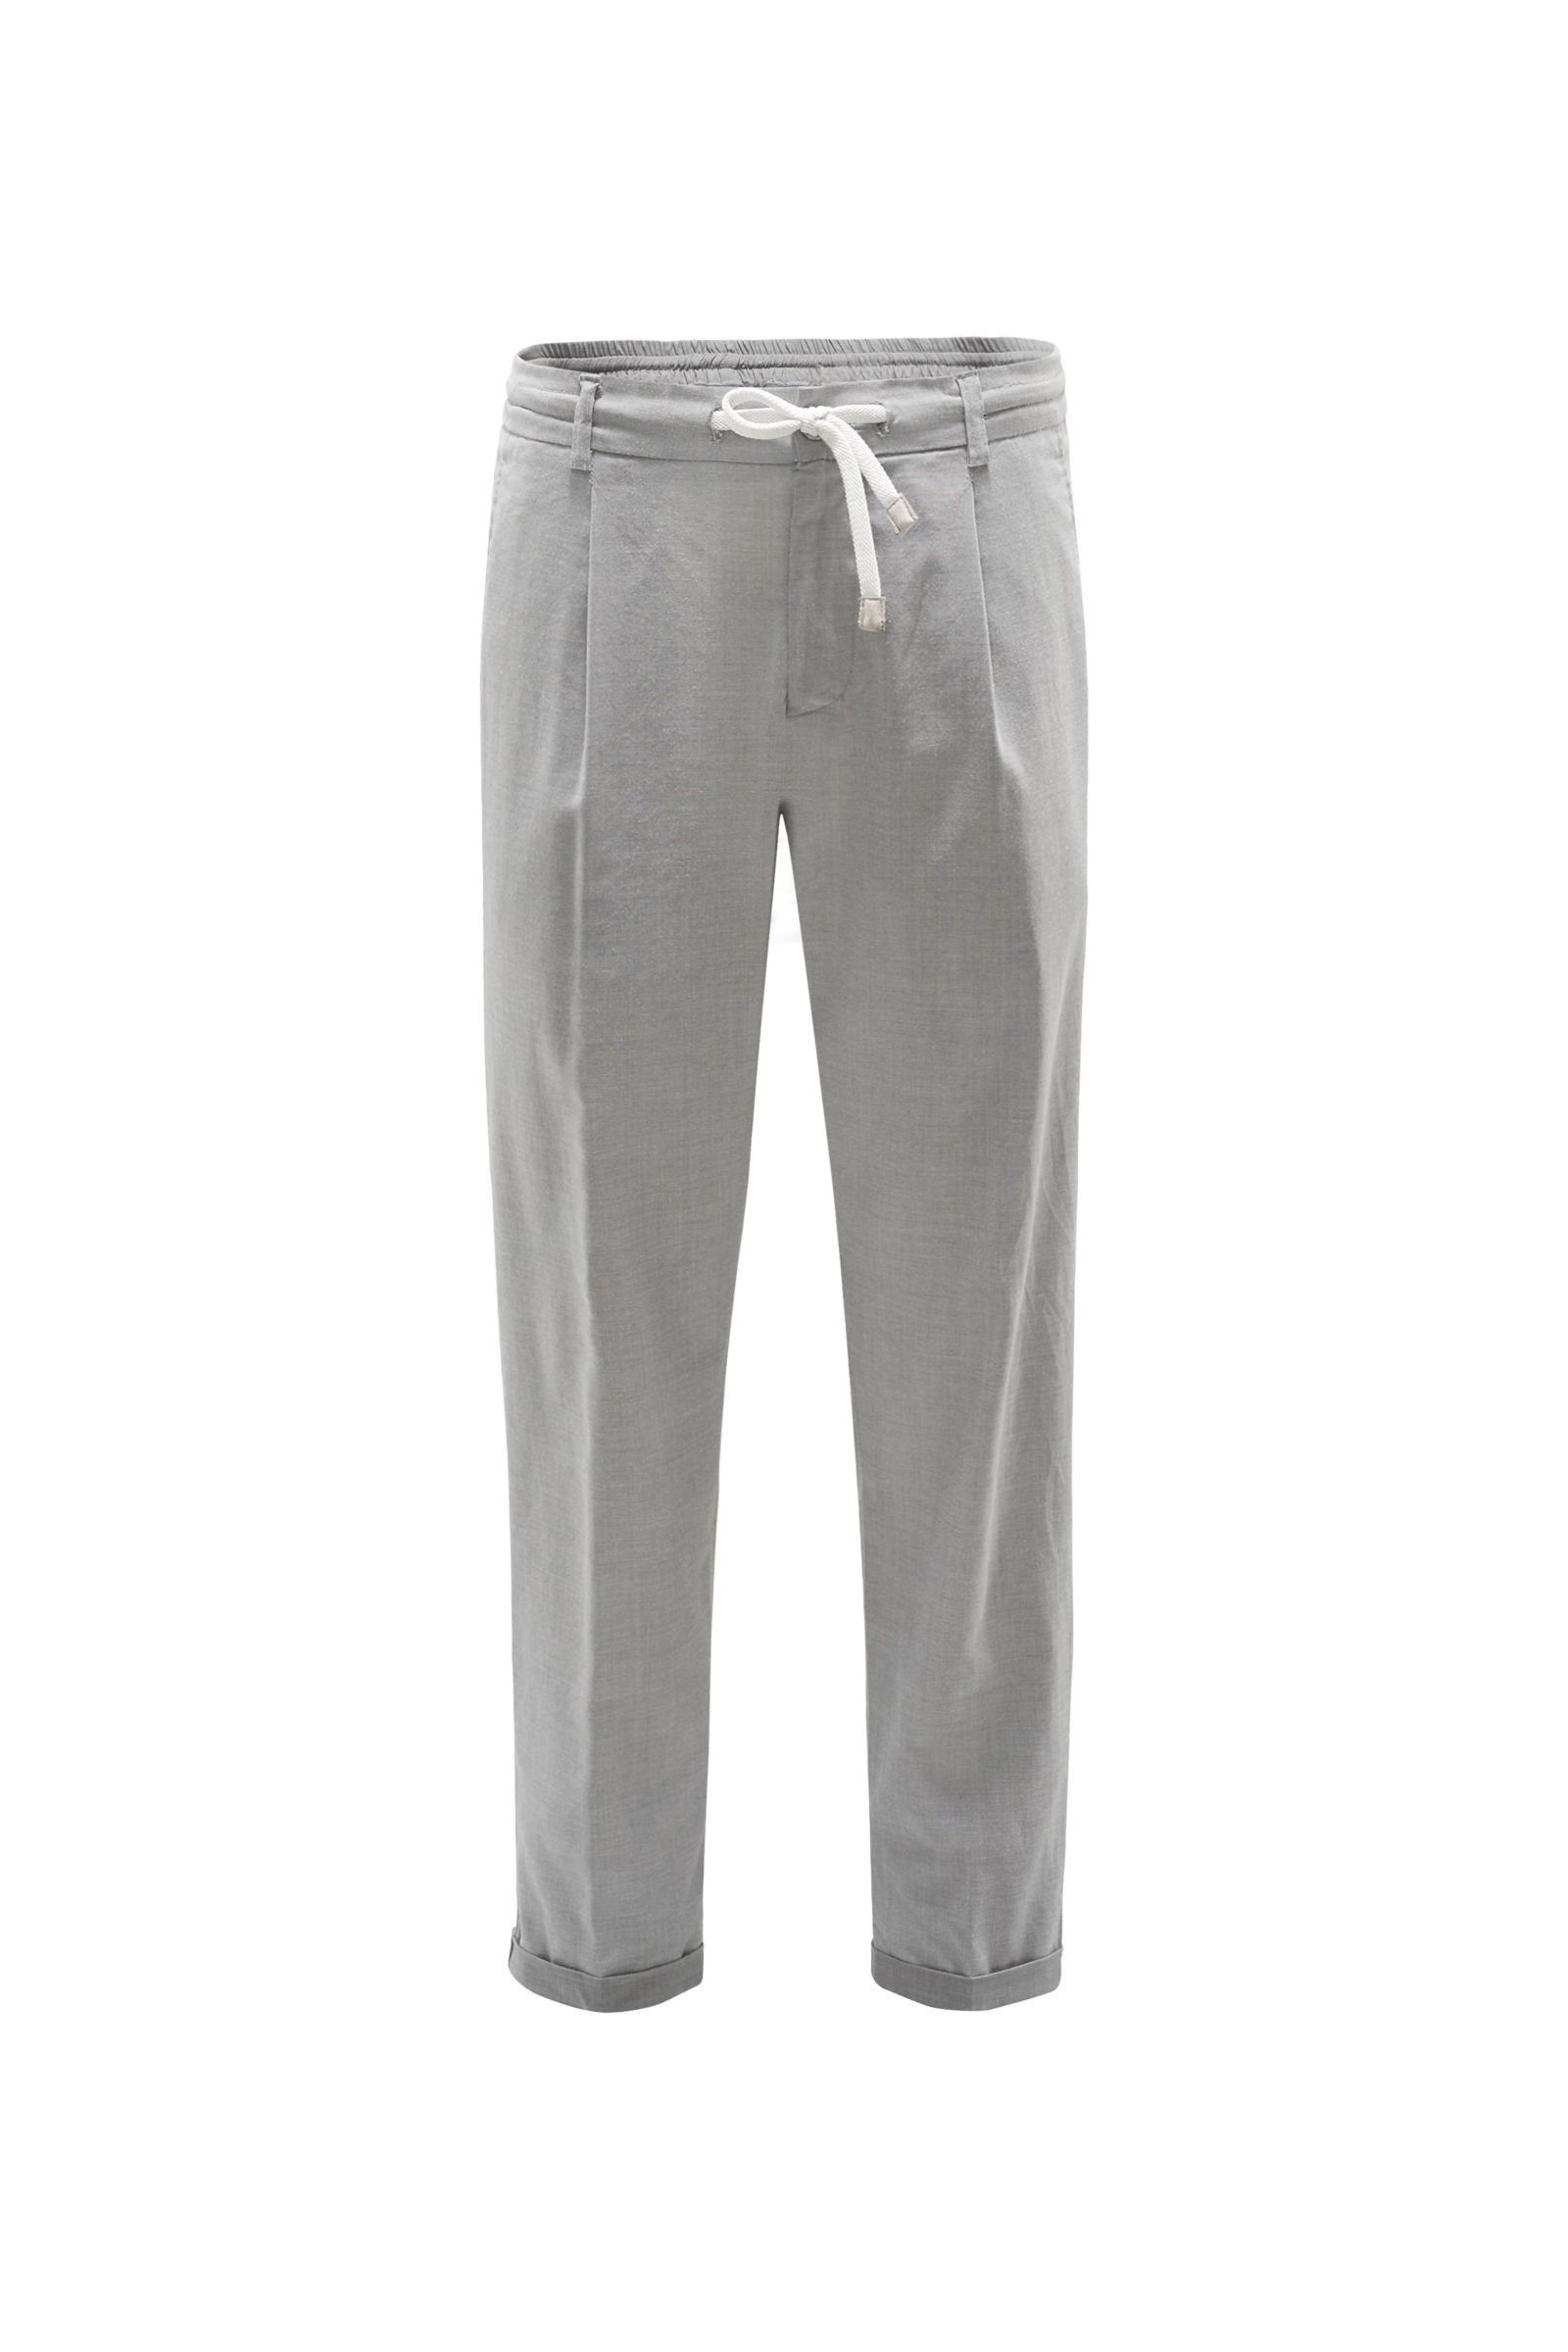 Jogger pants grey